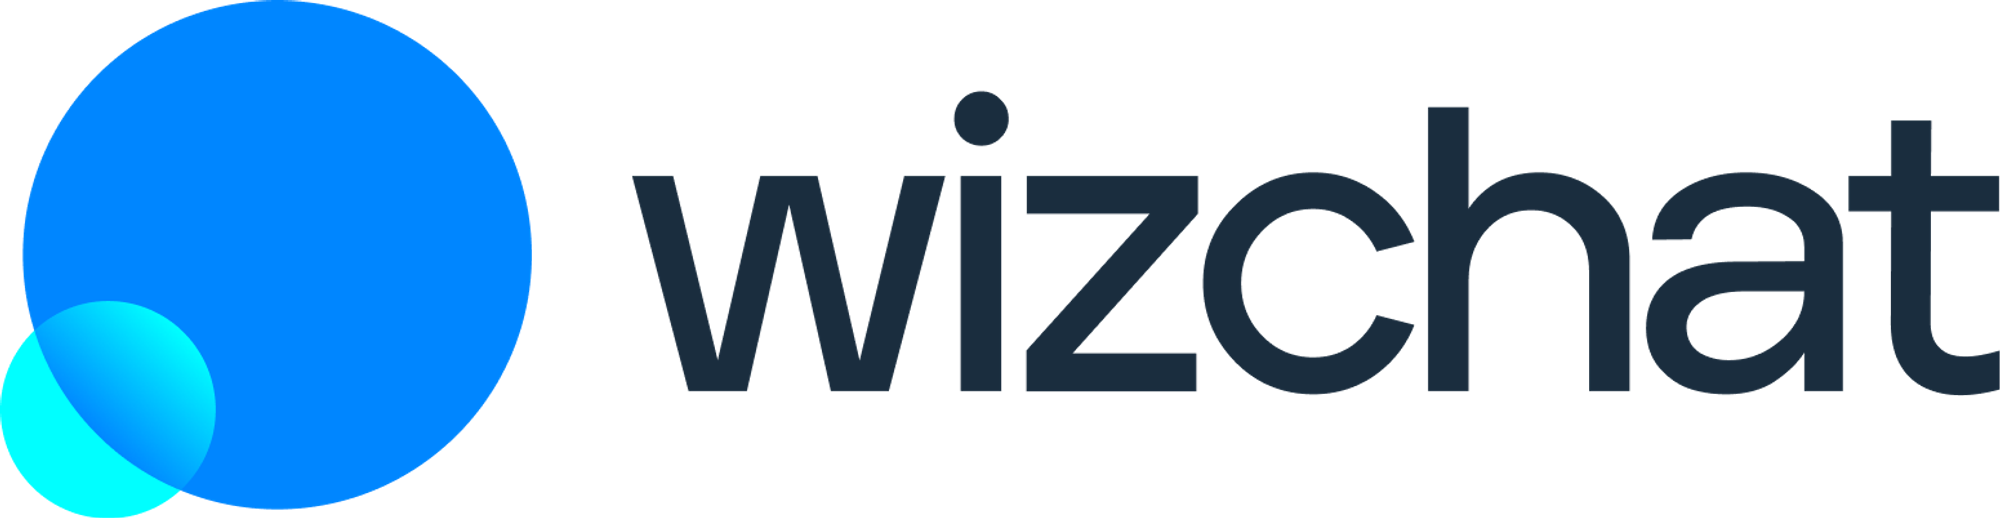 Modern logo design for wizchat.io